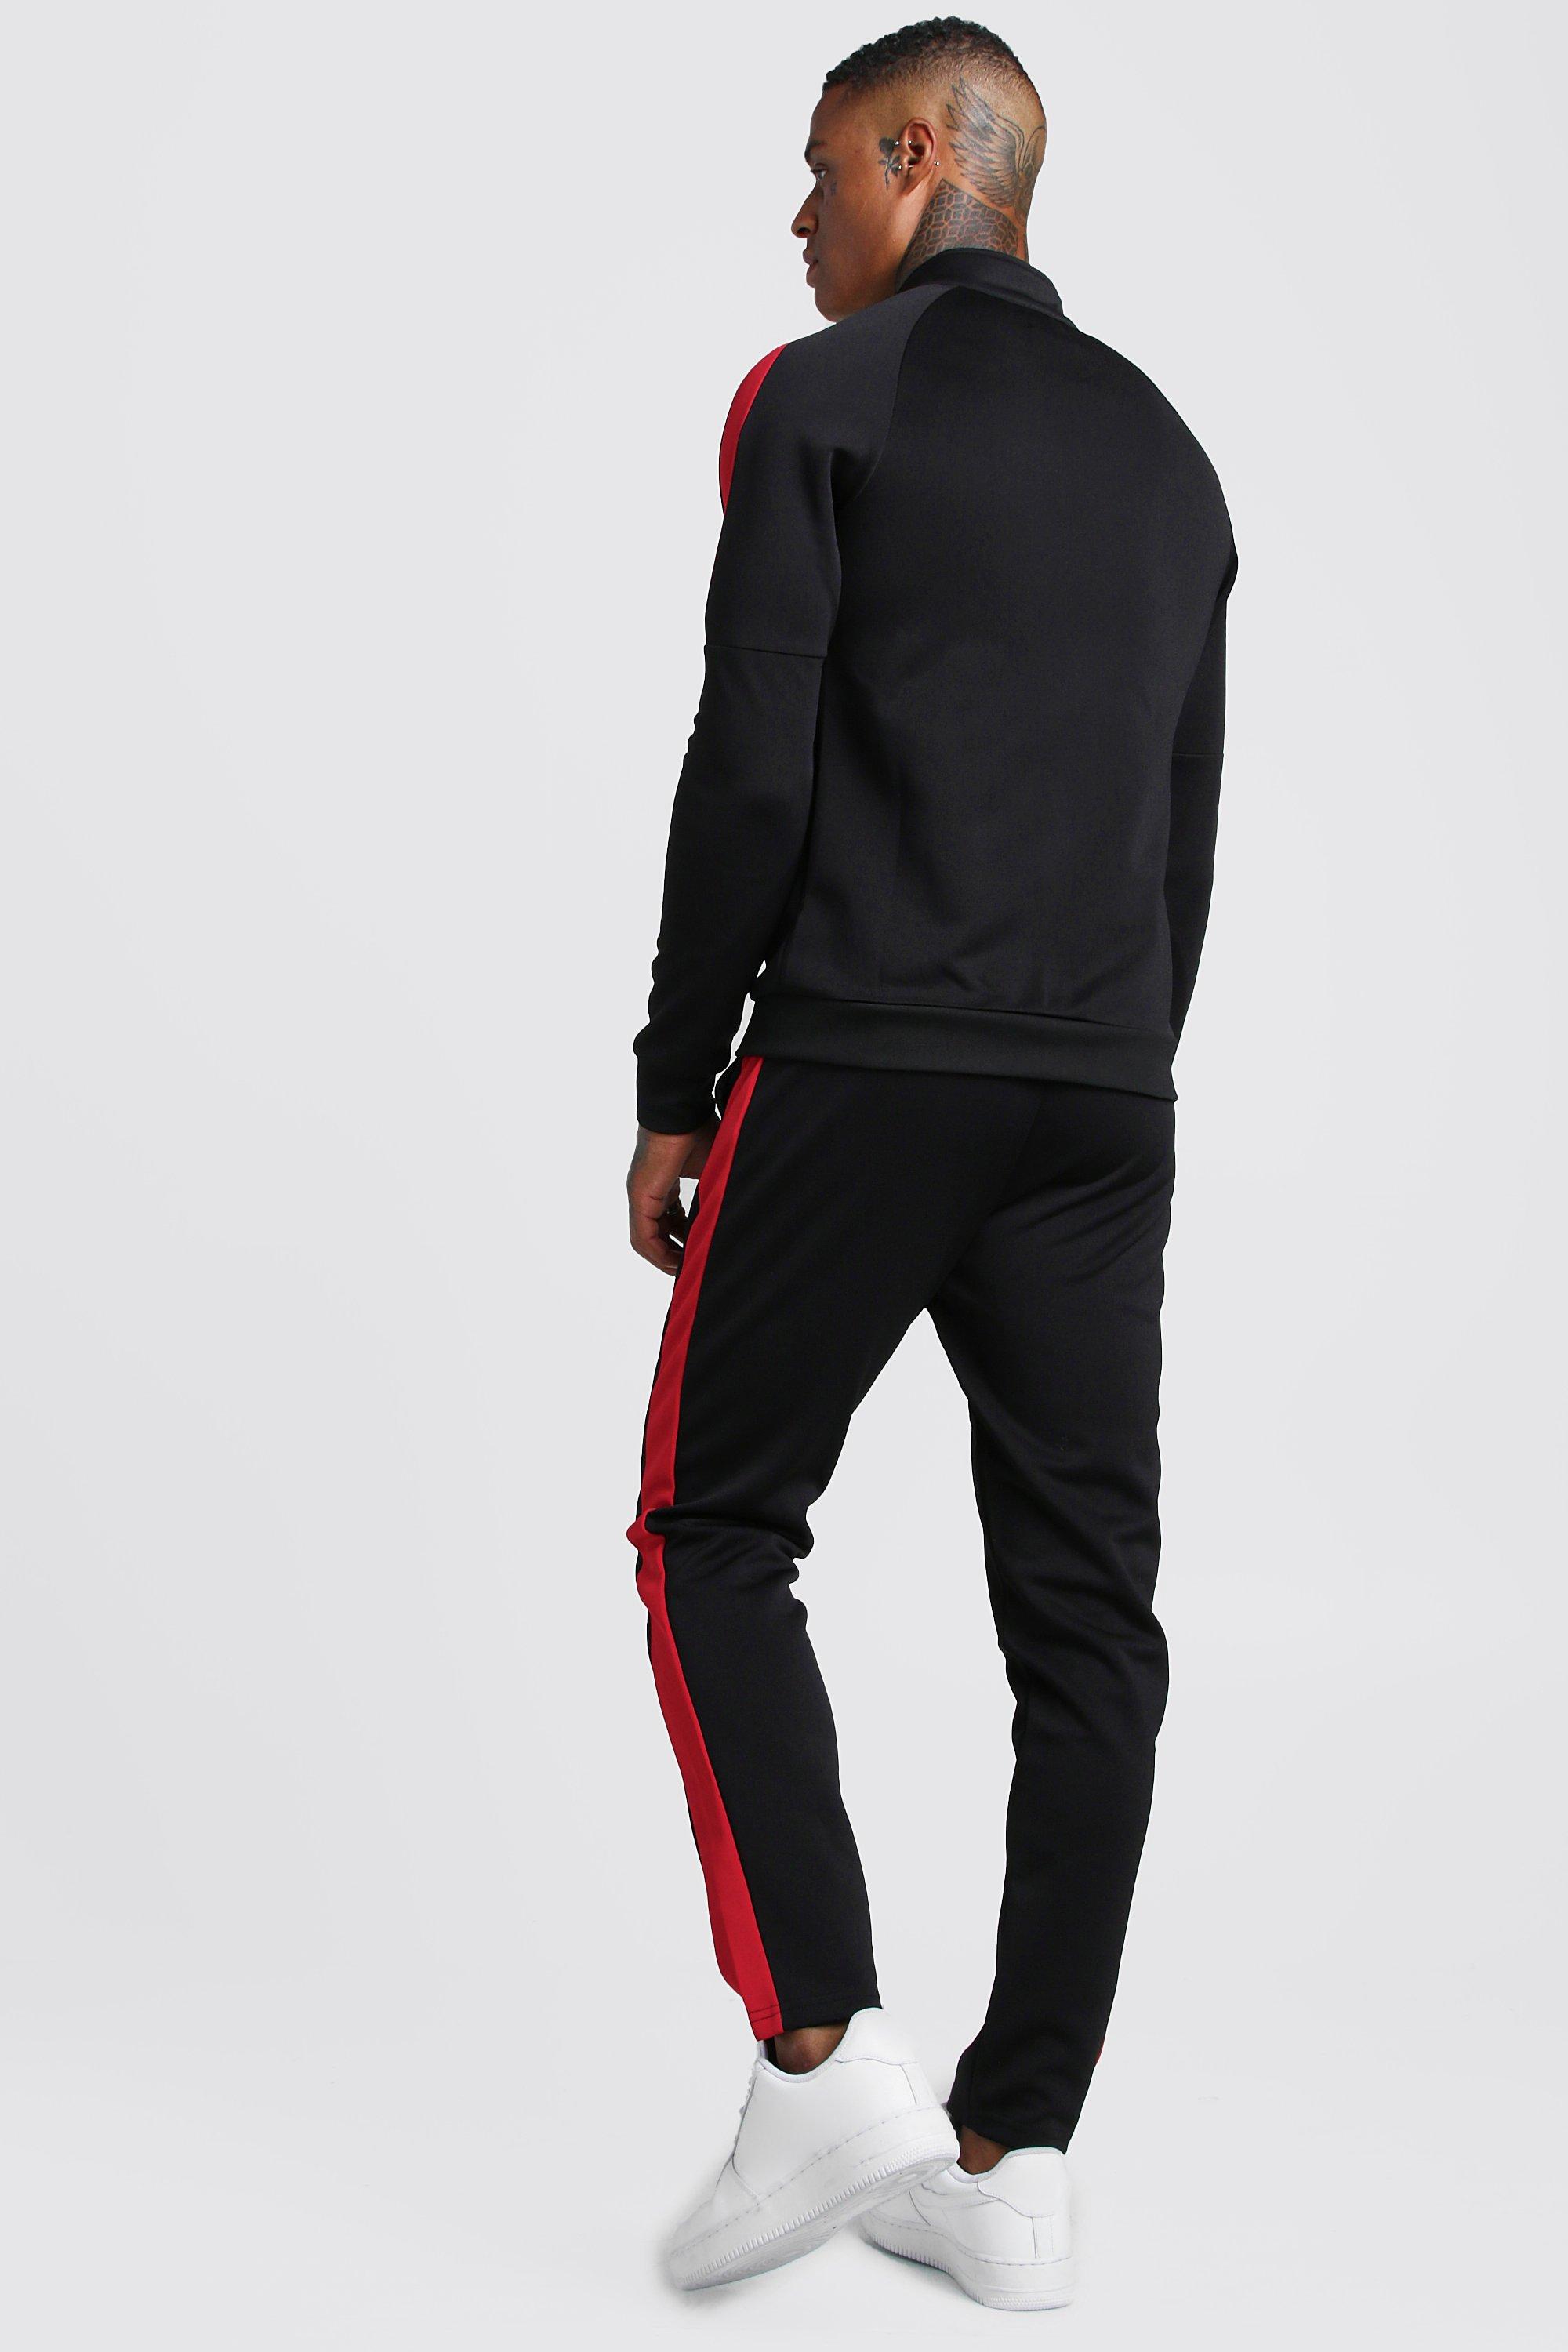 Chandal Hombre Sportwear Color Negro-Rojo